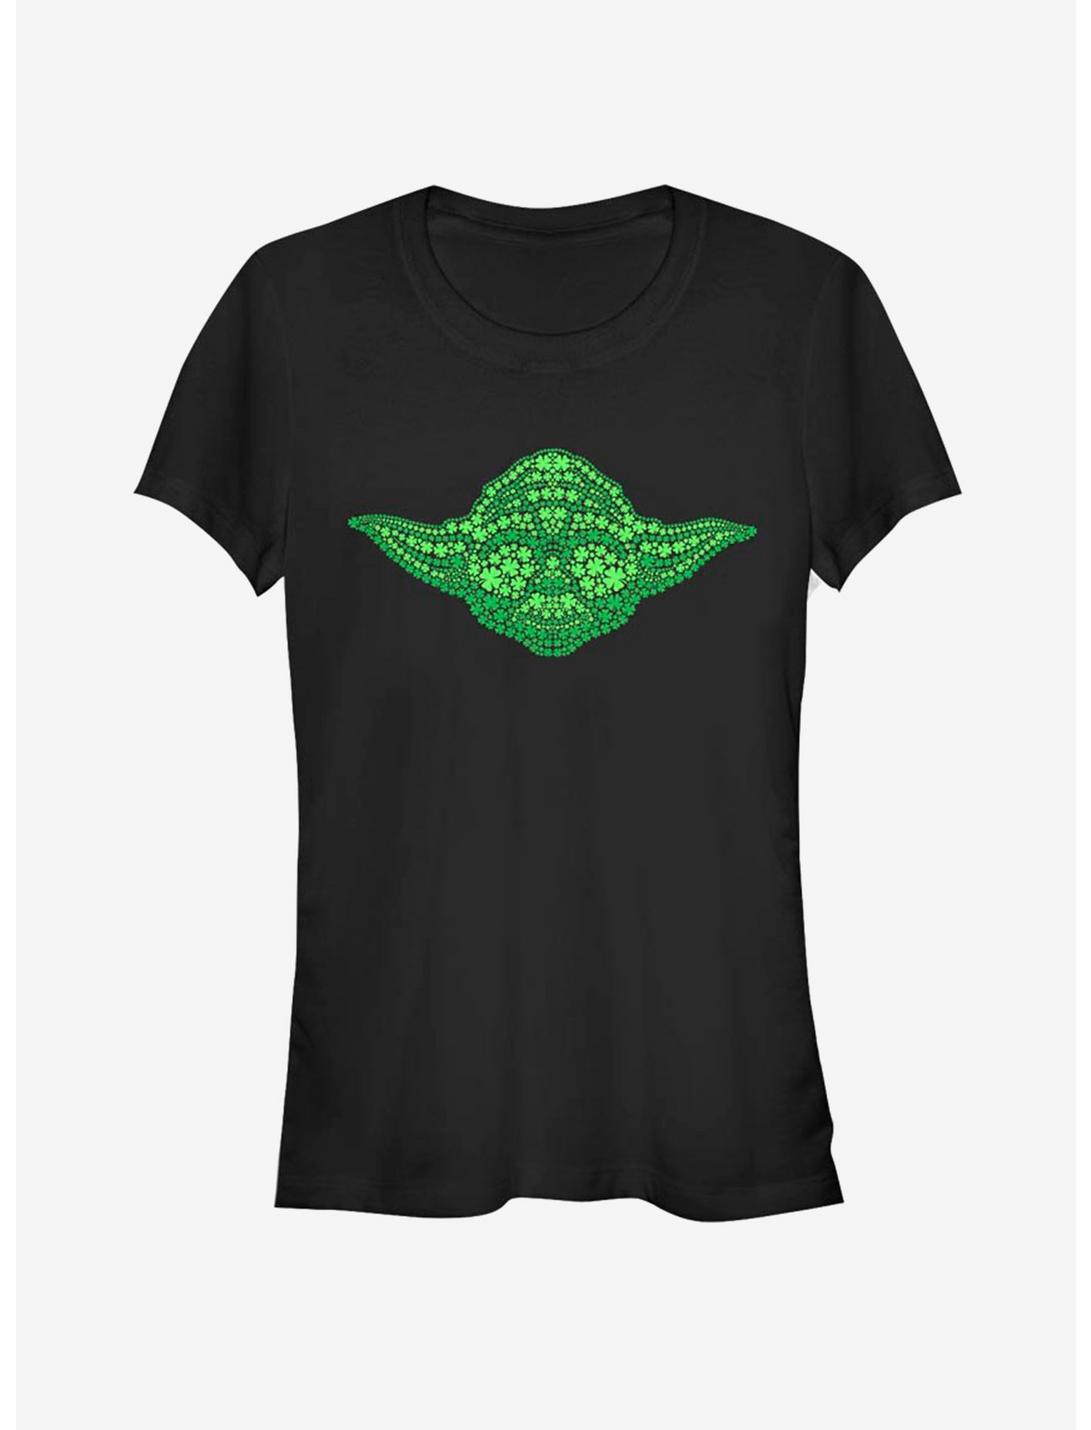 Star Wars Yoda Clovers Girls T-Shirt, BLACK, hi-res